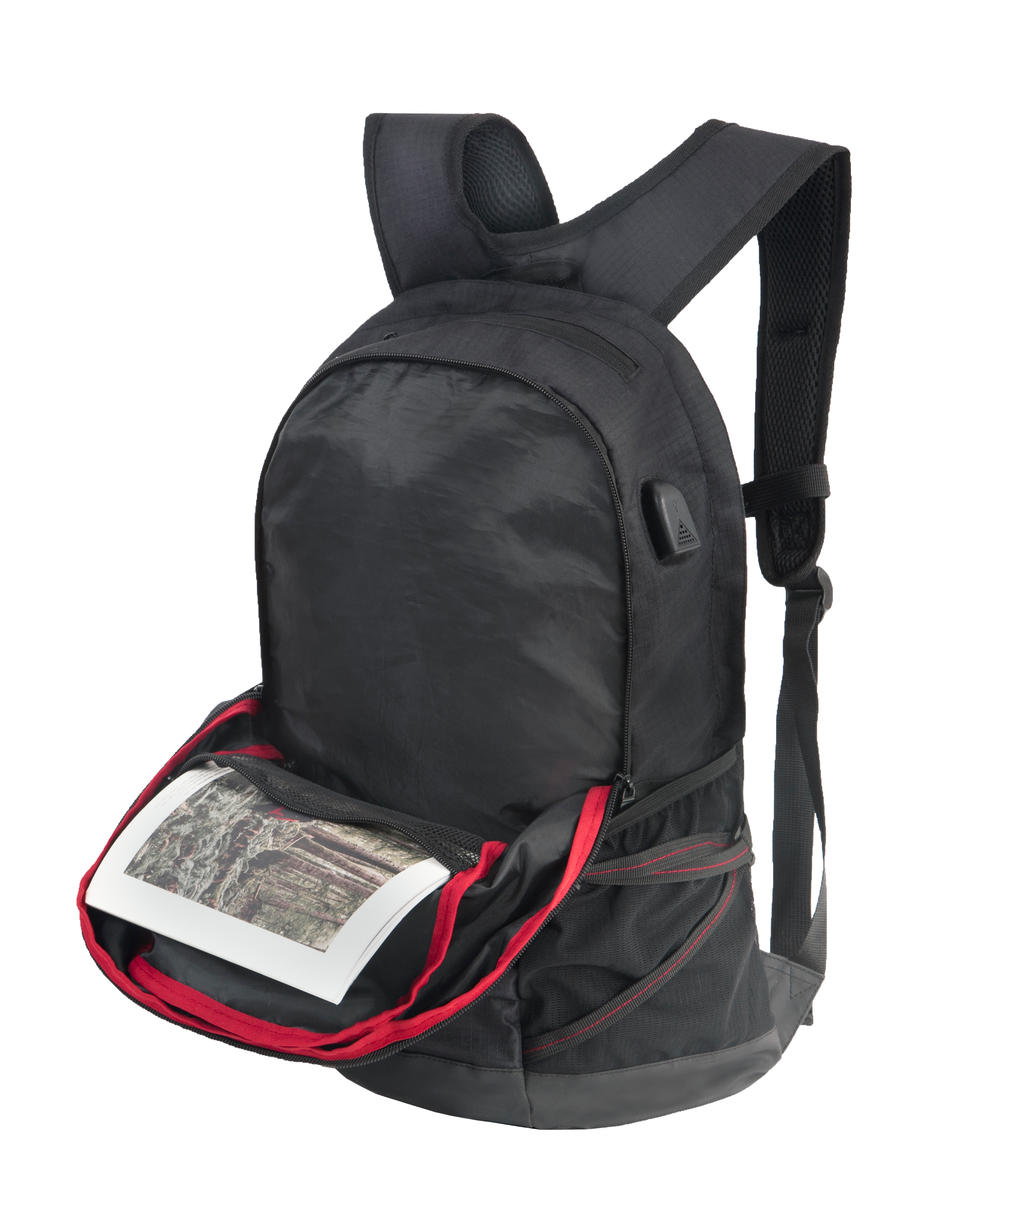  Leipzig Daily Laptop Backpack in Farbe Black/Black